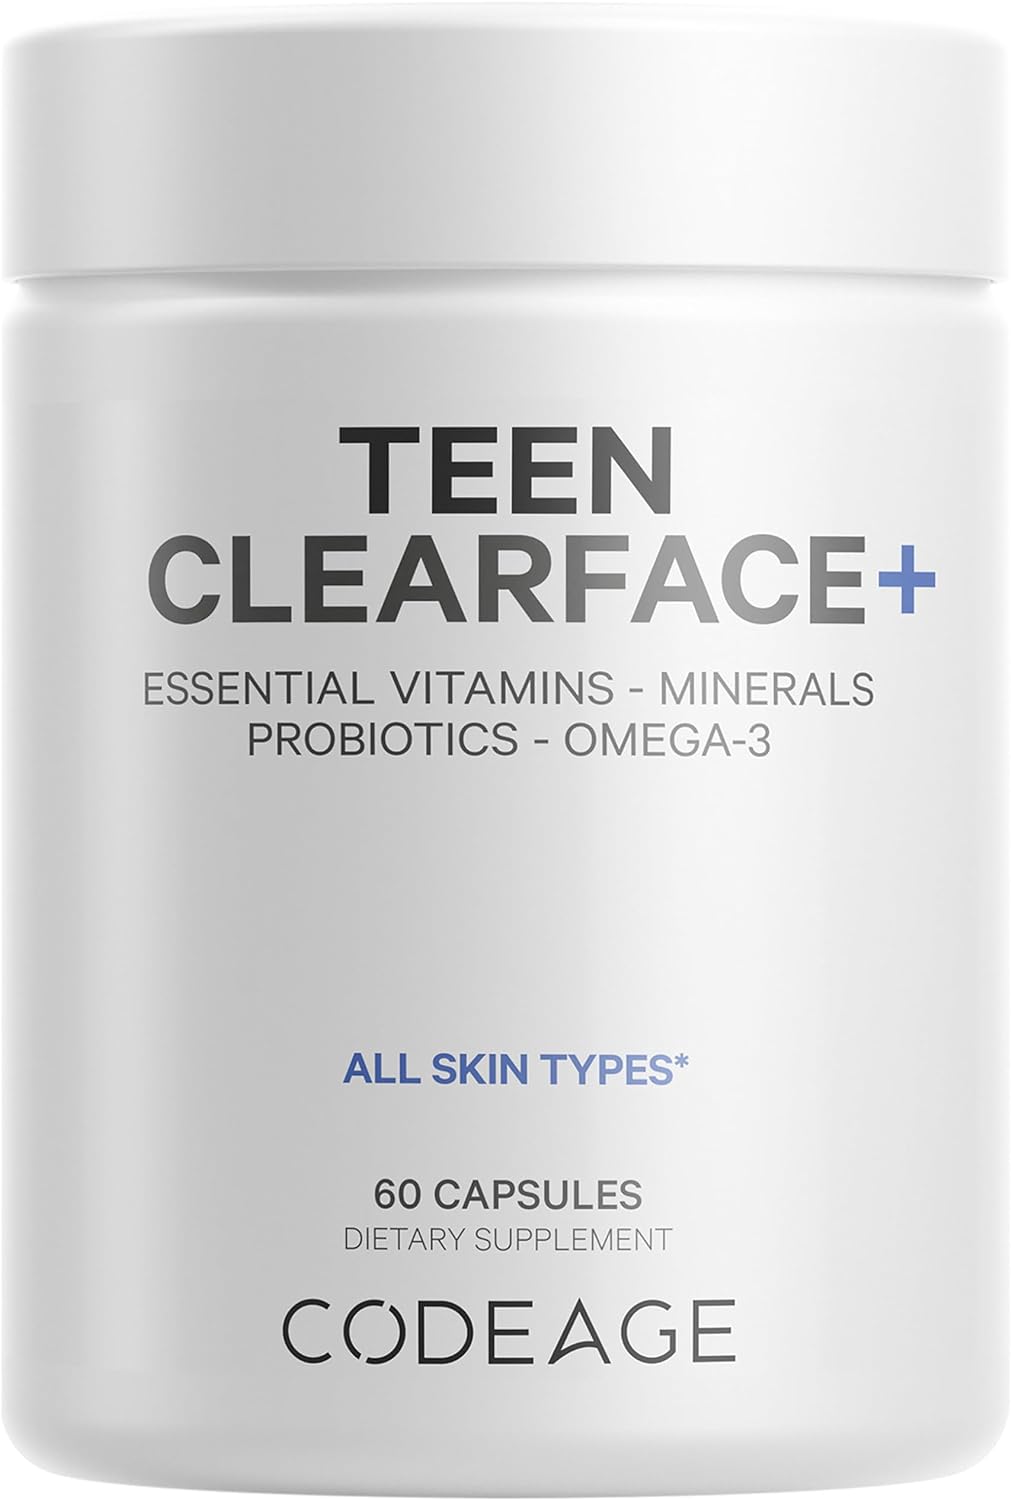 Codeage Teen Clearface Adolescent Face, Skin  Pimples, Vitamins A, C, D3, E, Pantothenic Acid, Niacin, Zinc Supplement Teenagers, Probiotics, L-Lysine, Omega-3, Oily Skin, Pores, Spots - 60 Capsules